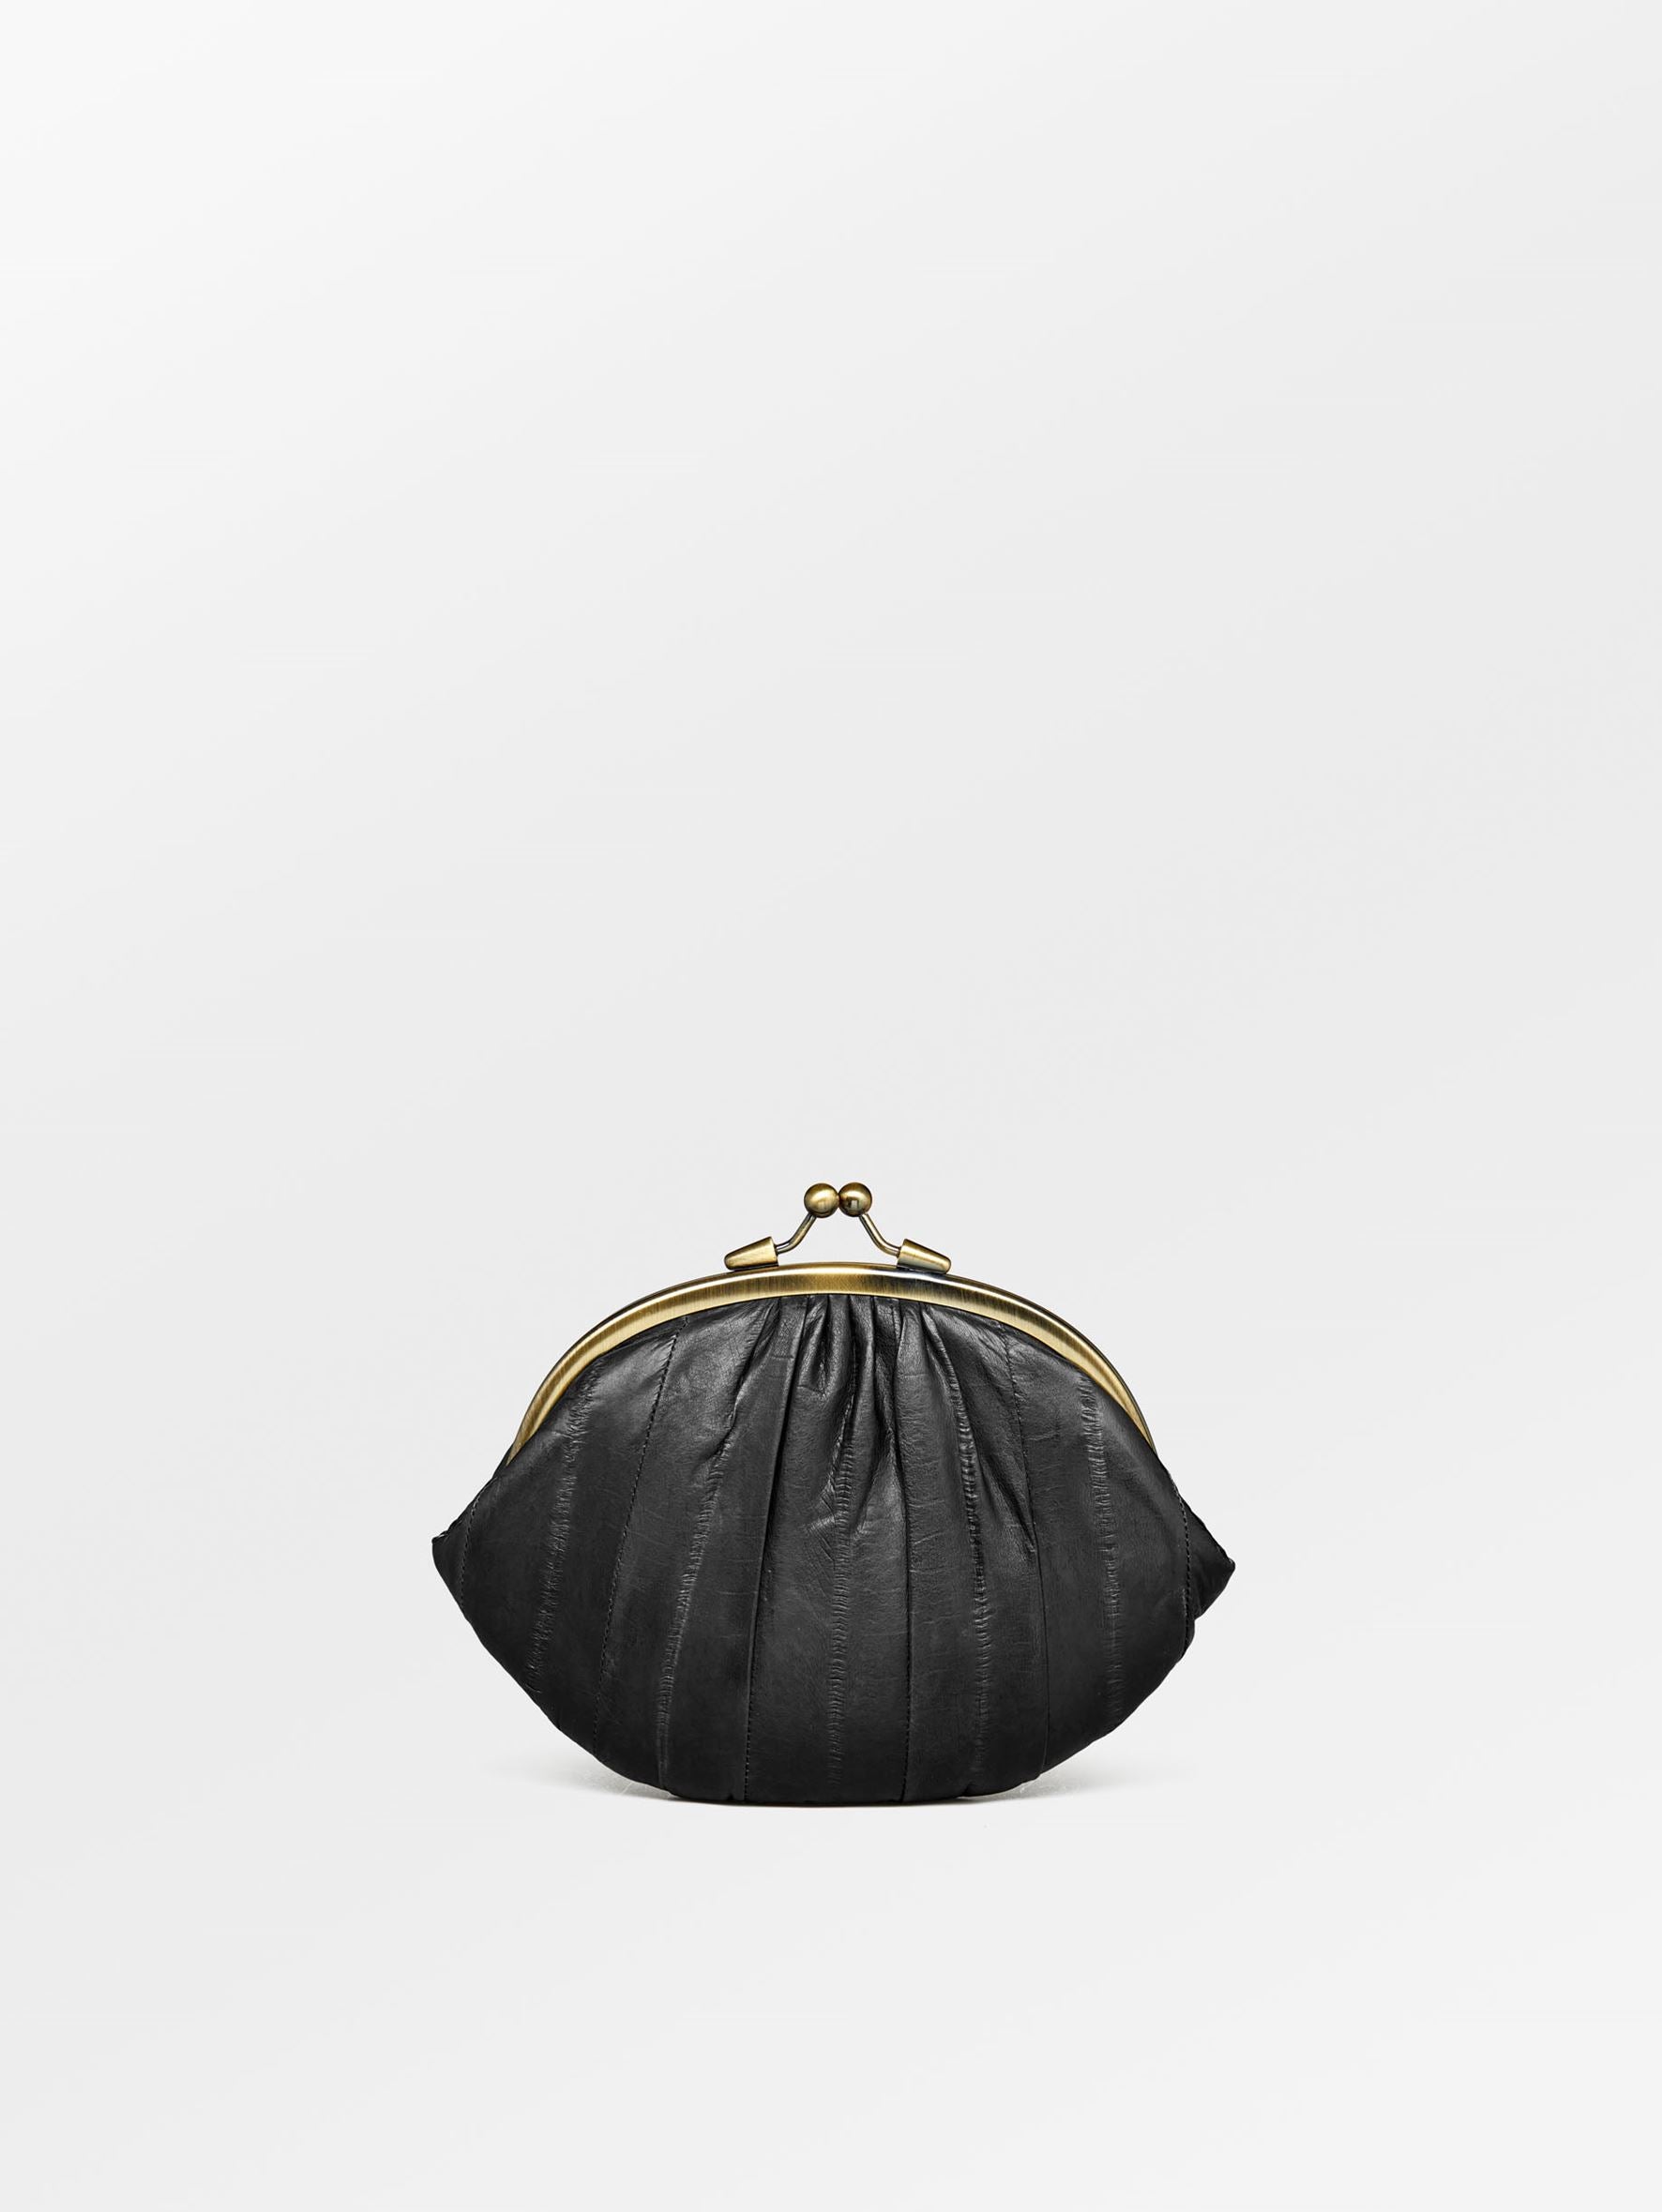 Becksöndergaard, Granny Purse - Black, accessories, sale, sale